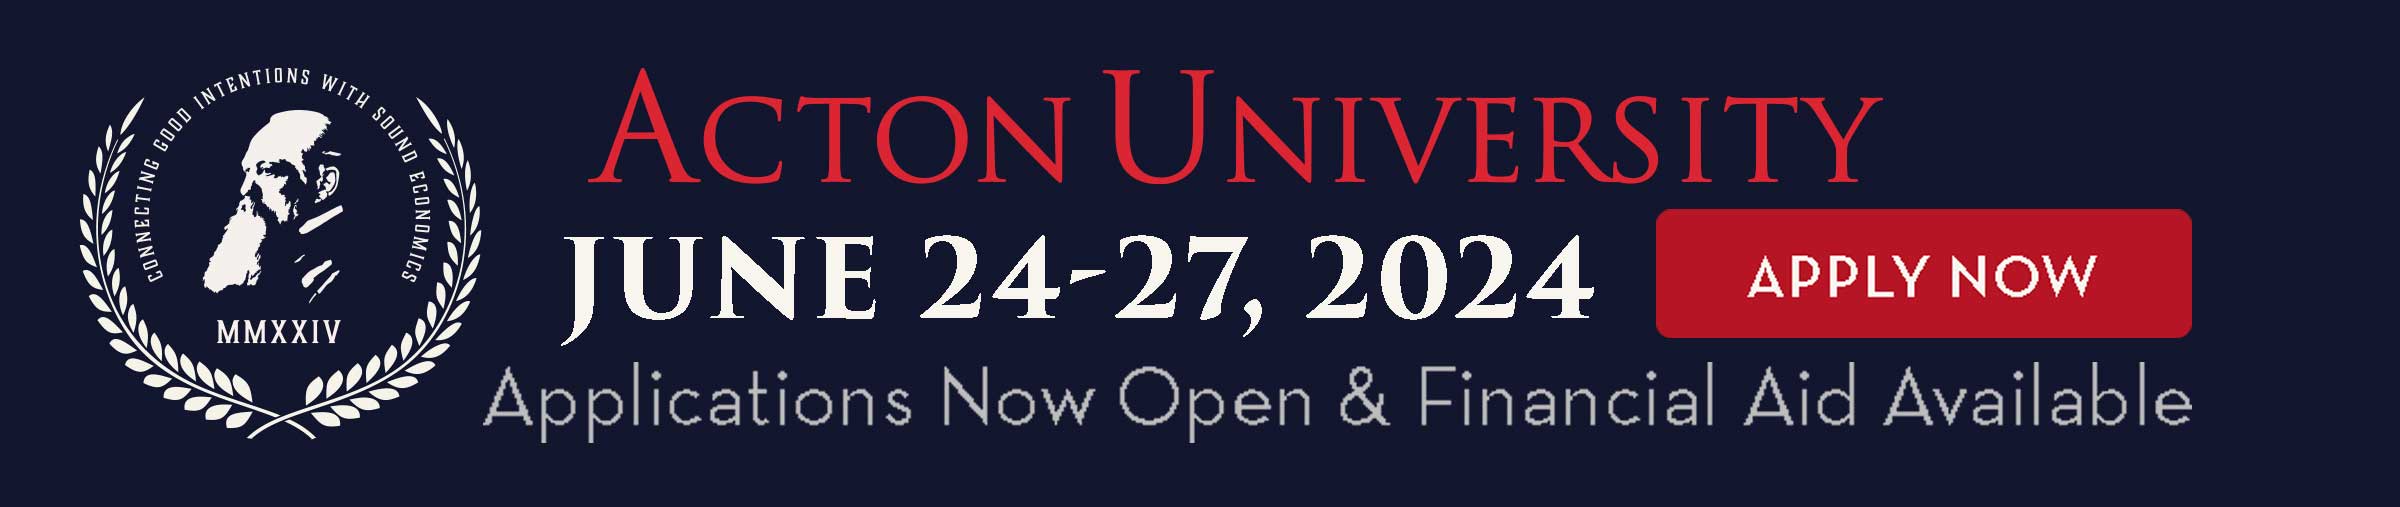 Acton University 2024 Mobile Banner